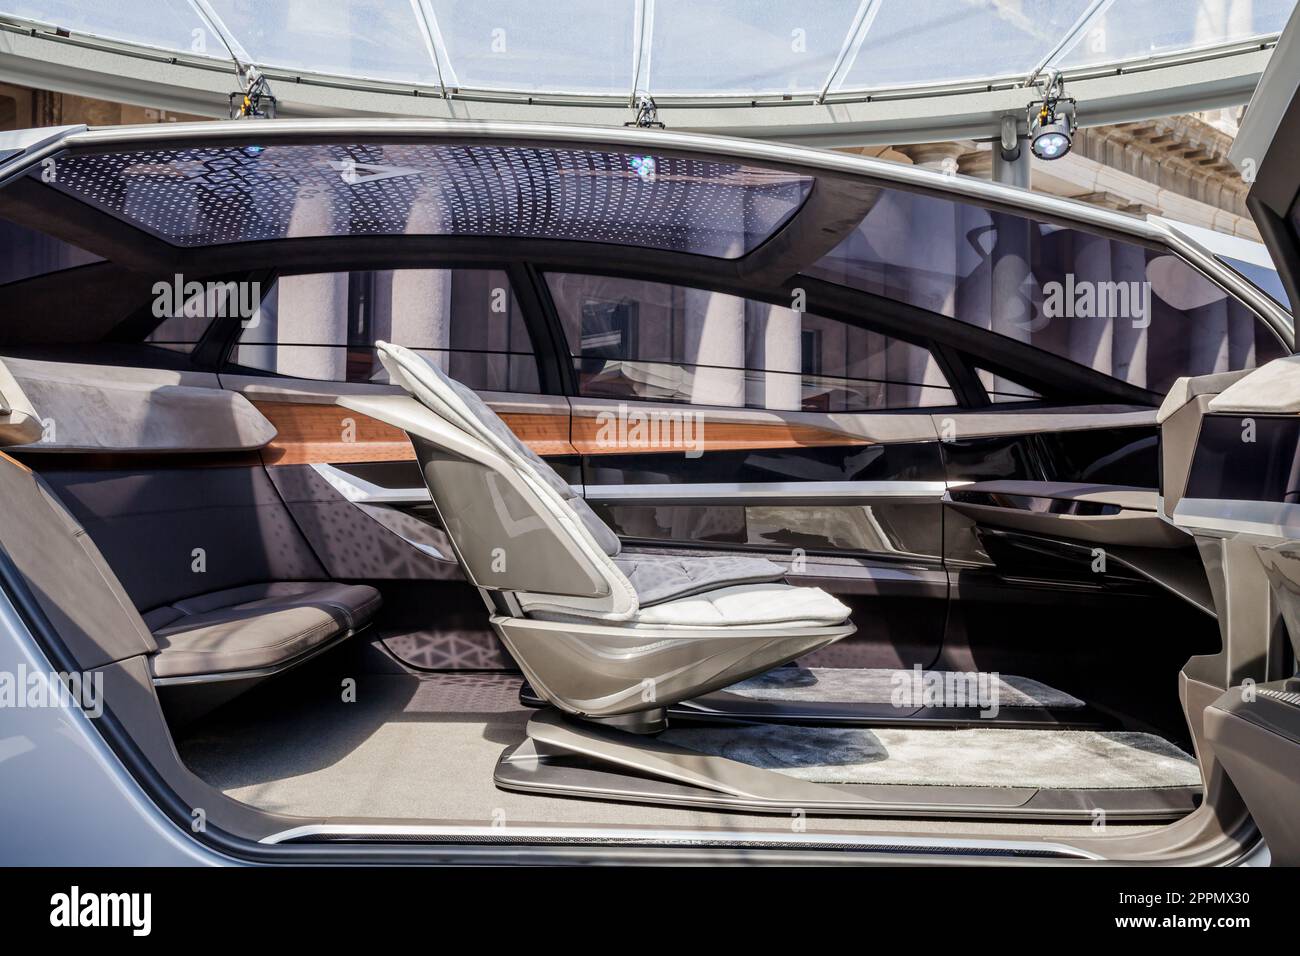 MILAN, ITALY - APRIL 16 2018: Audi city lab. Interior view of white Audi Aicon concept car, self-driving luxury sedan with electric propulsion scheme. Stock Photo